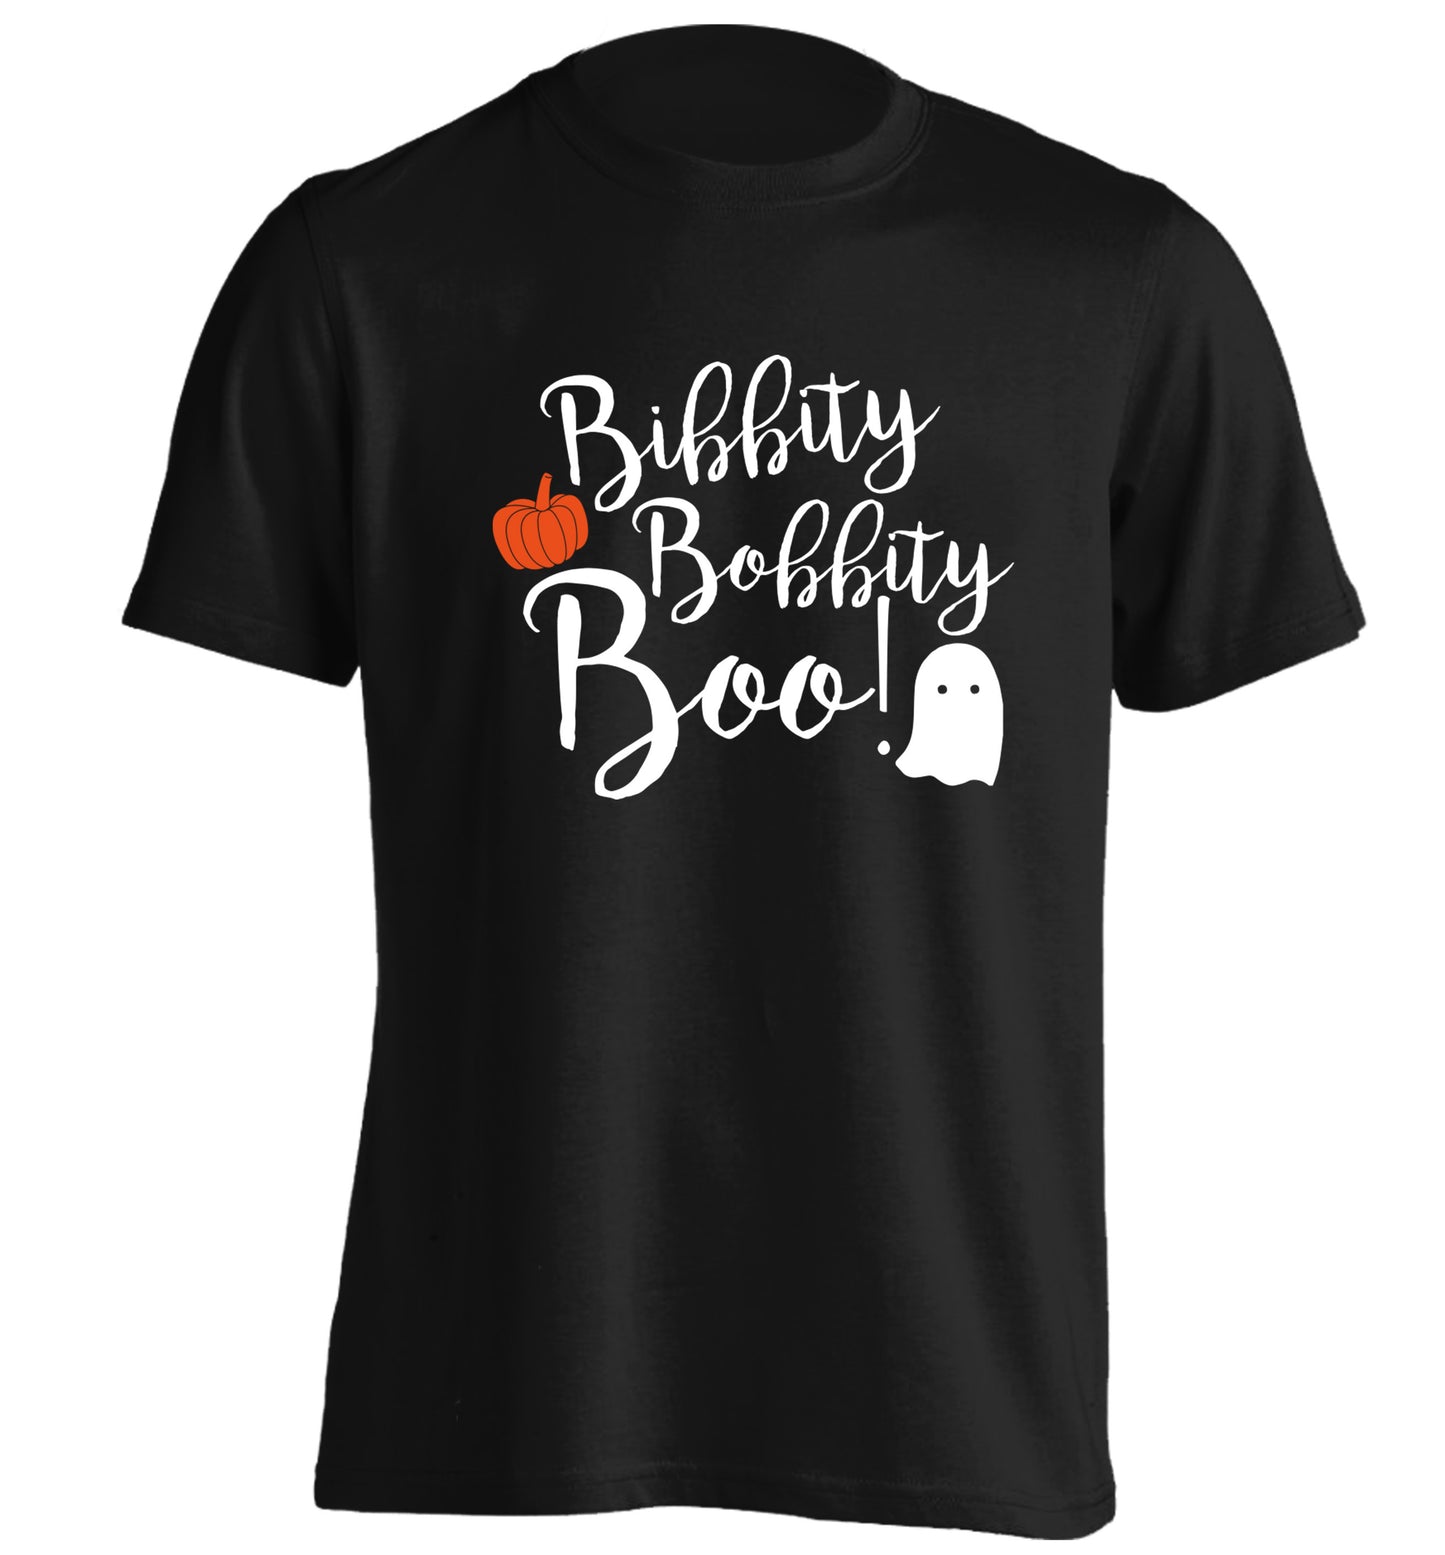 Bibbity bobbity boo! adults unisex black Tshirt 2XL